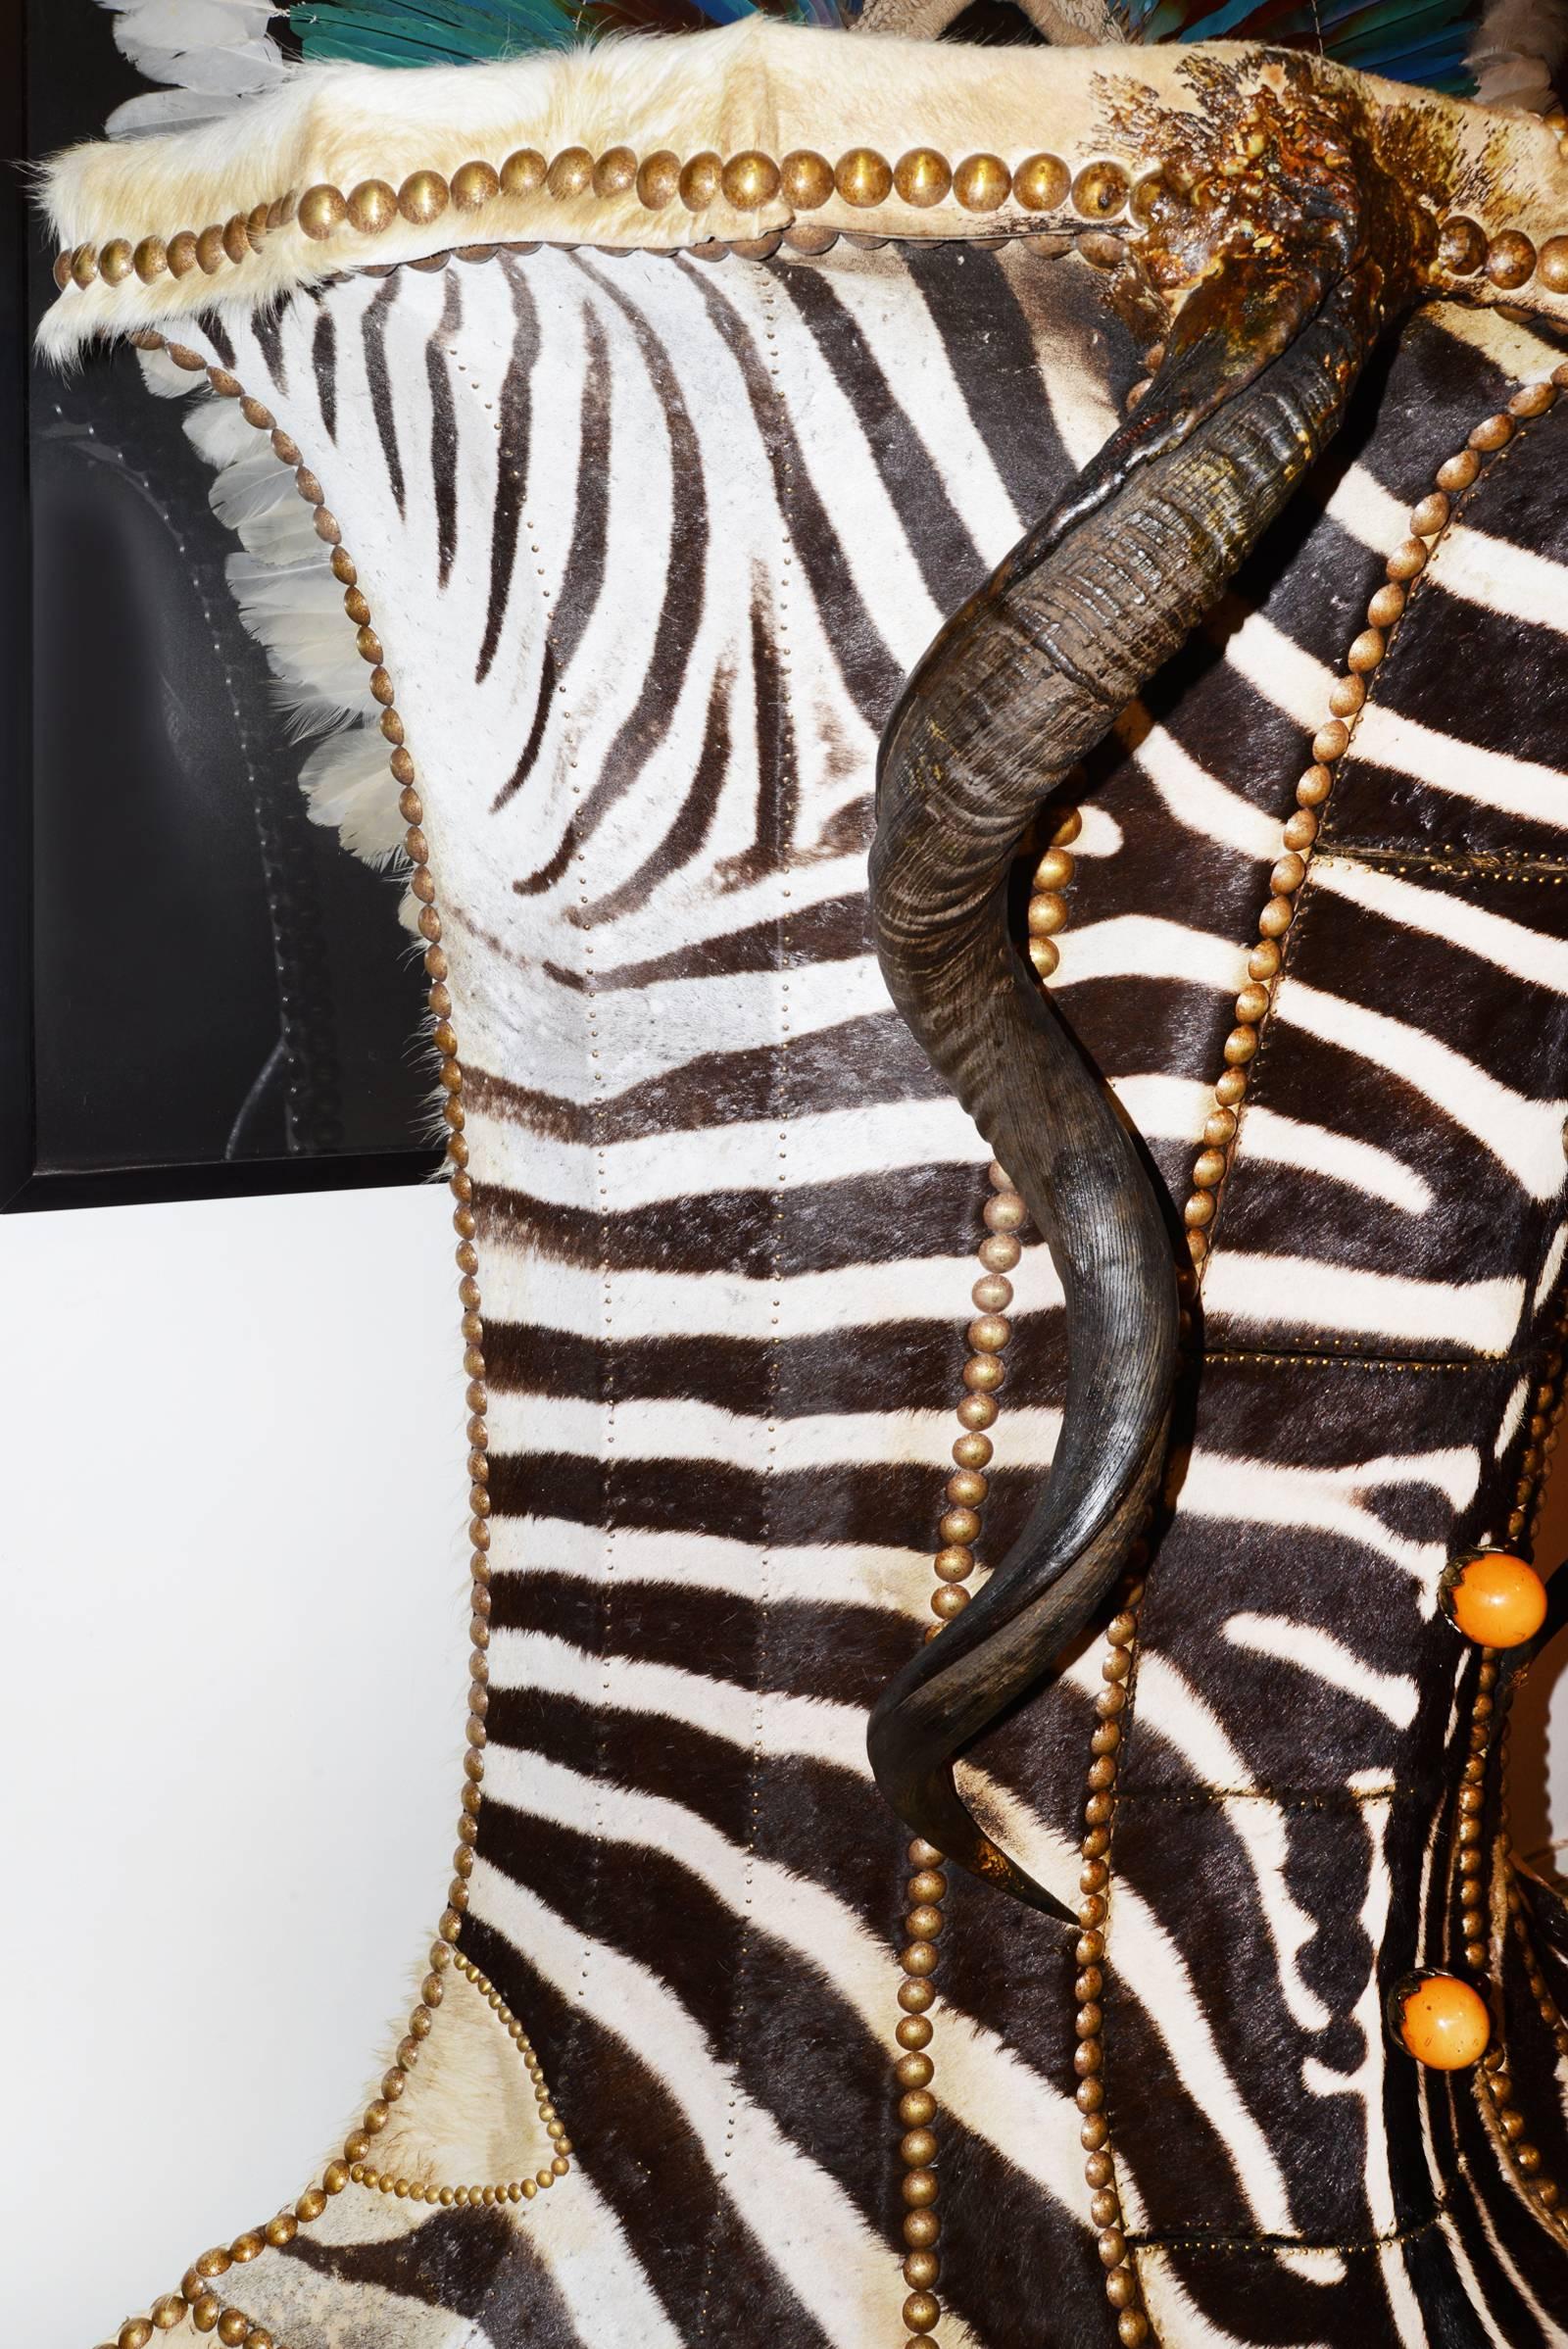 Zebra Head Chest of Drawers with Zebra Skin For Sale 2